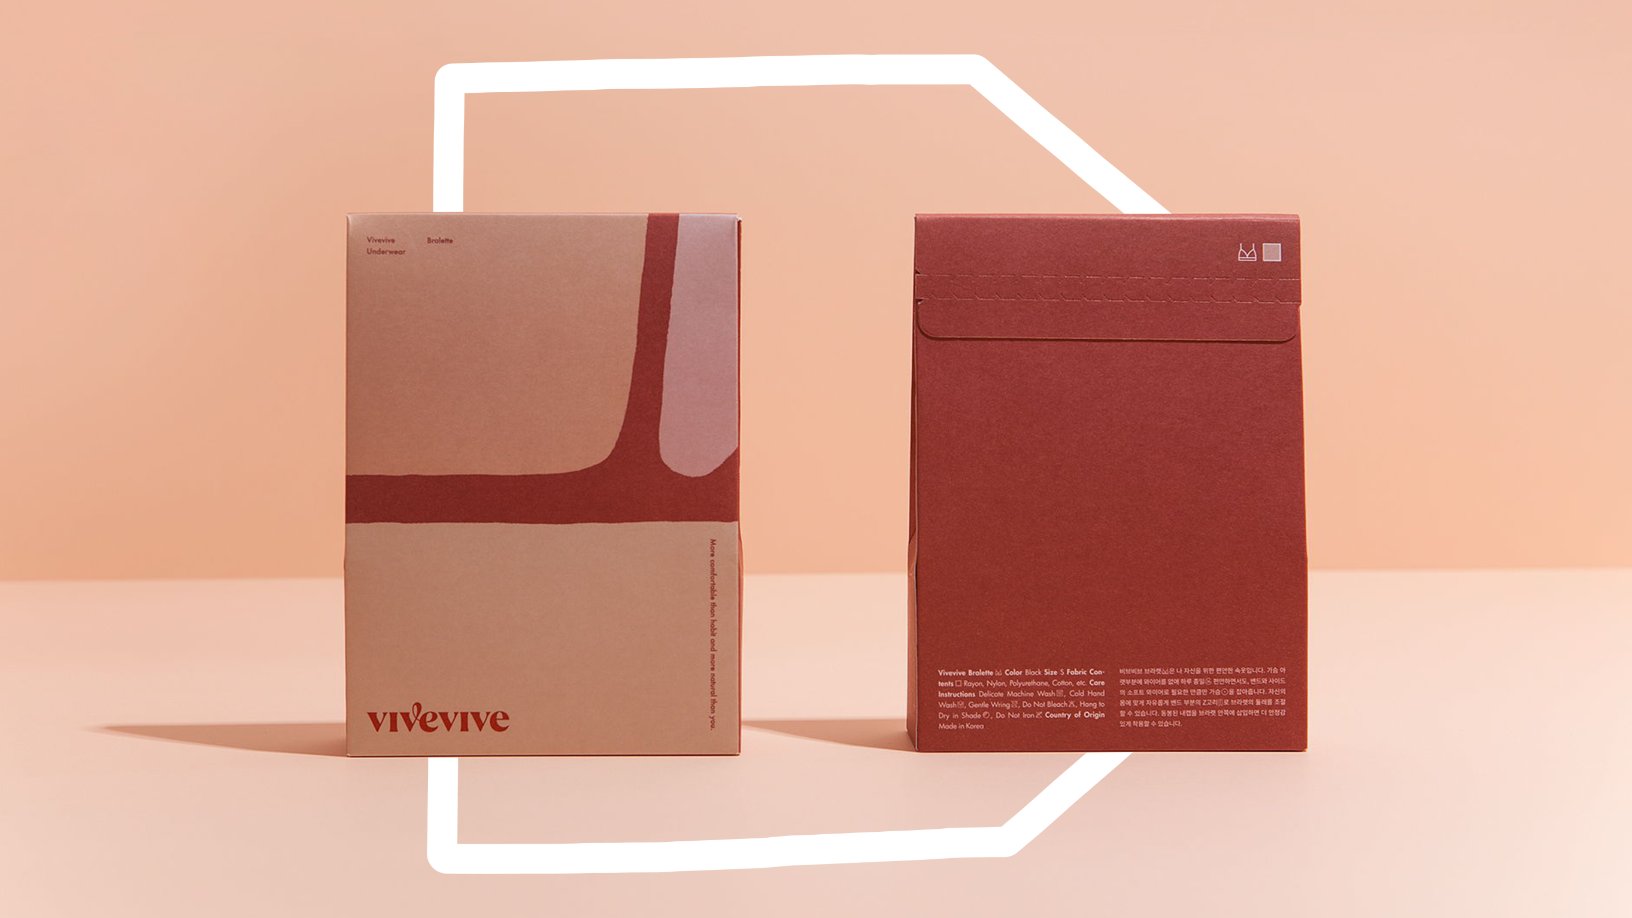 Design of unique menstrual underwear packaging